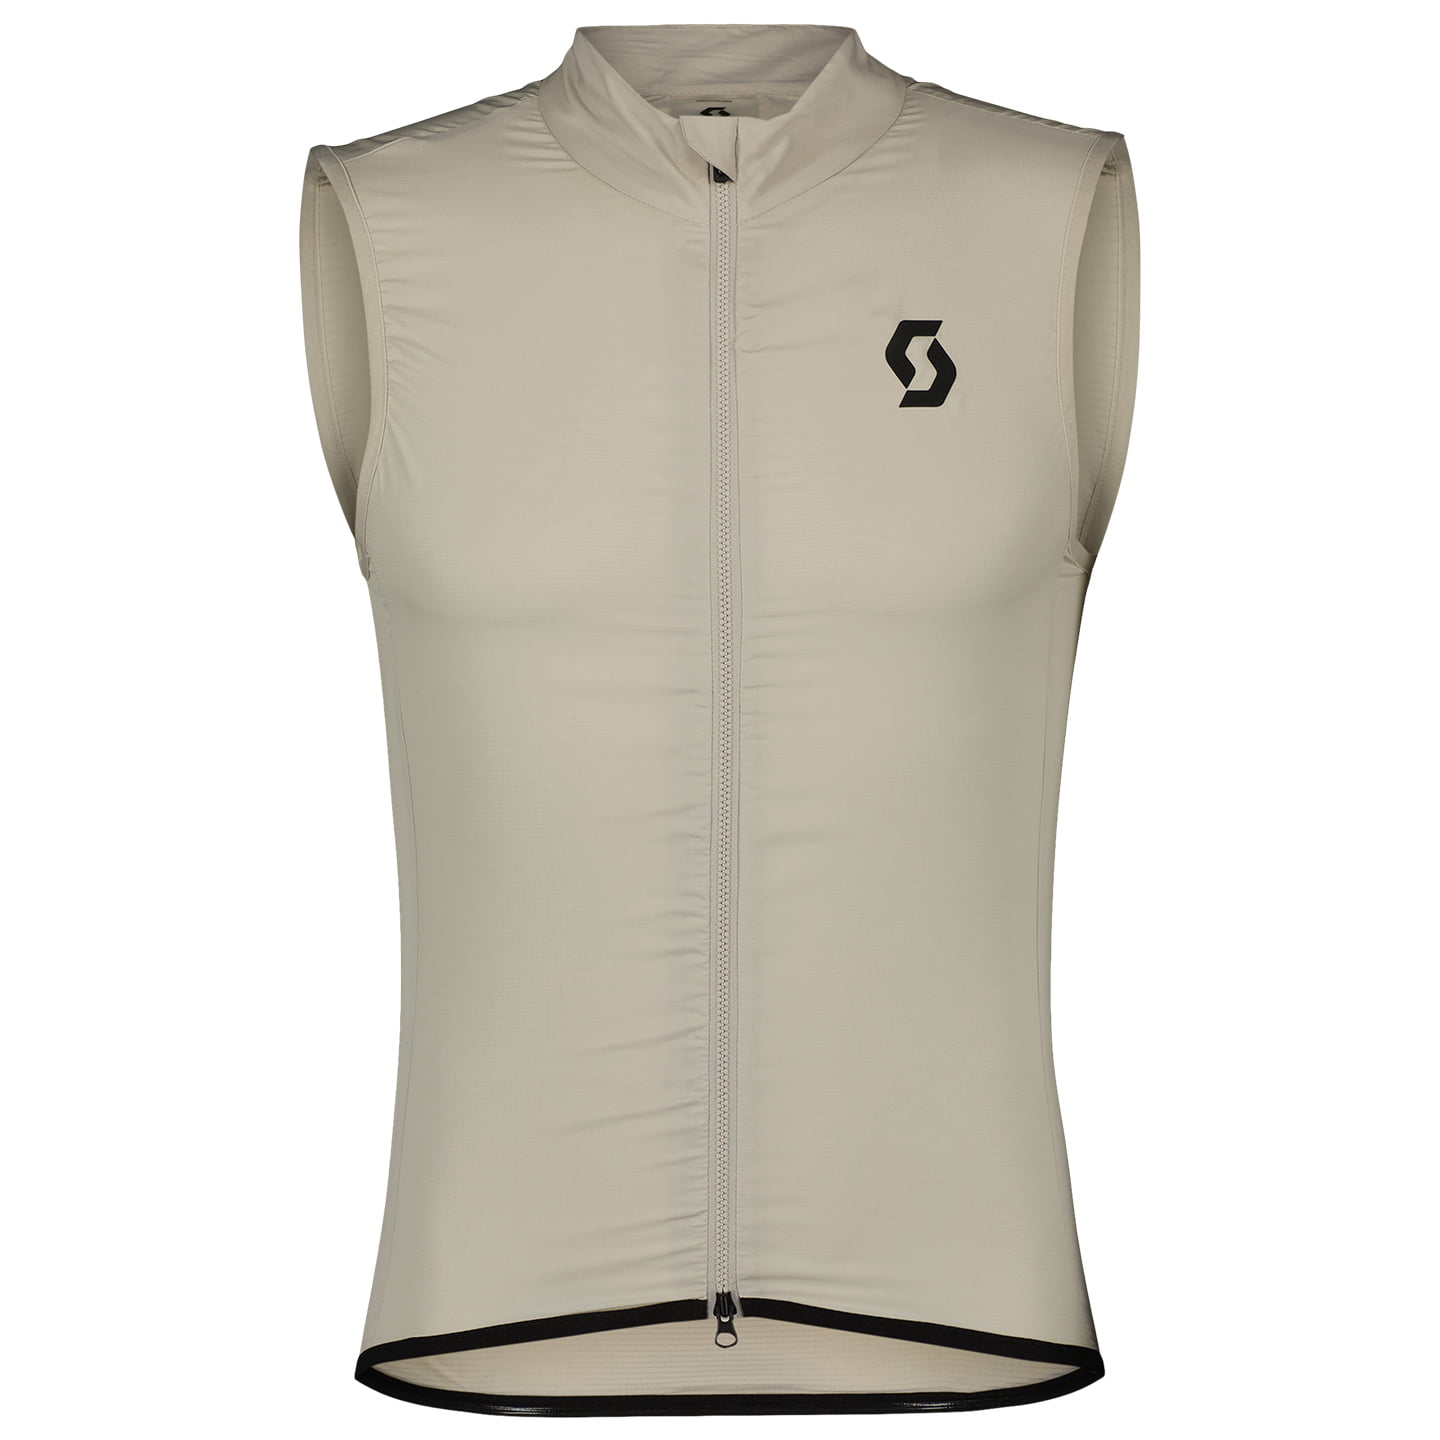 SCOTT Wind Vests ULTD. Wind Vest, for men, size M, Cycling vest, Cycle clothing